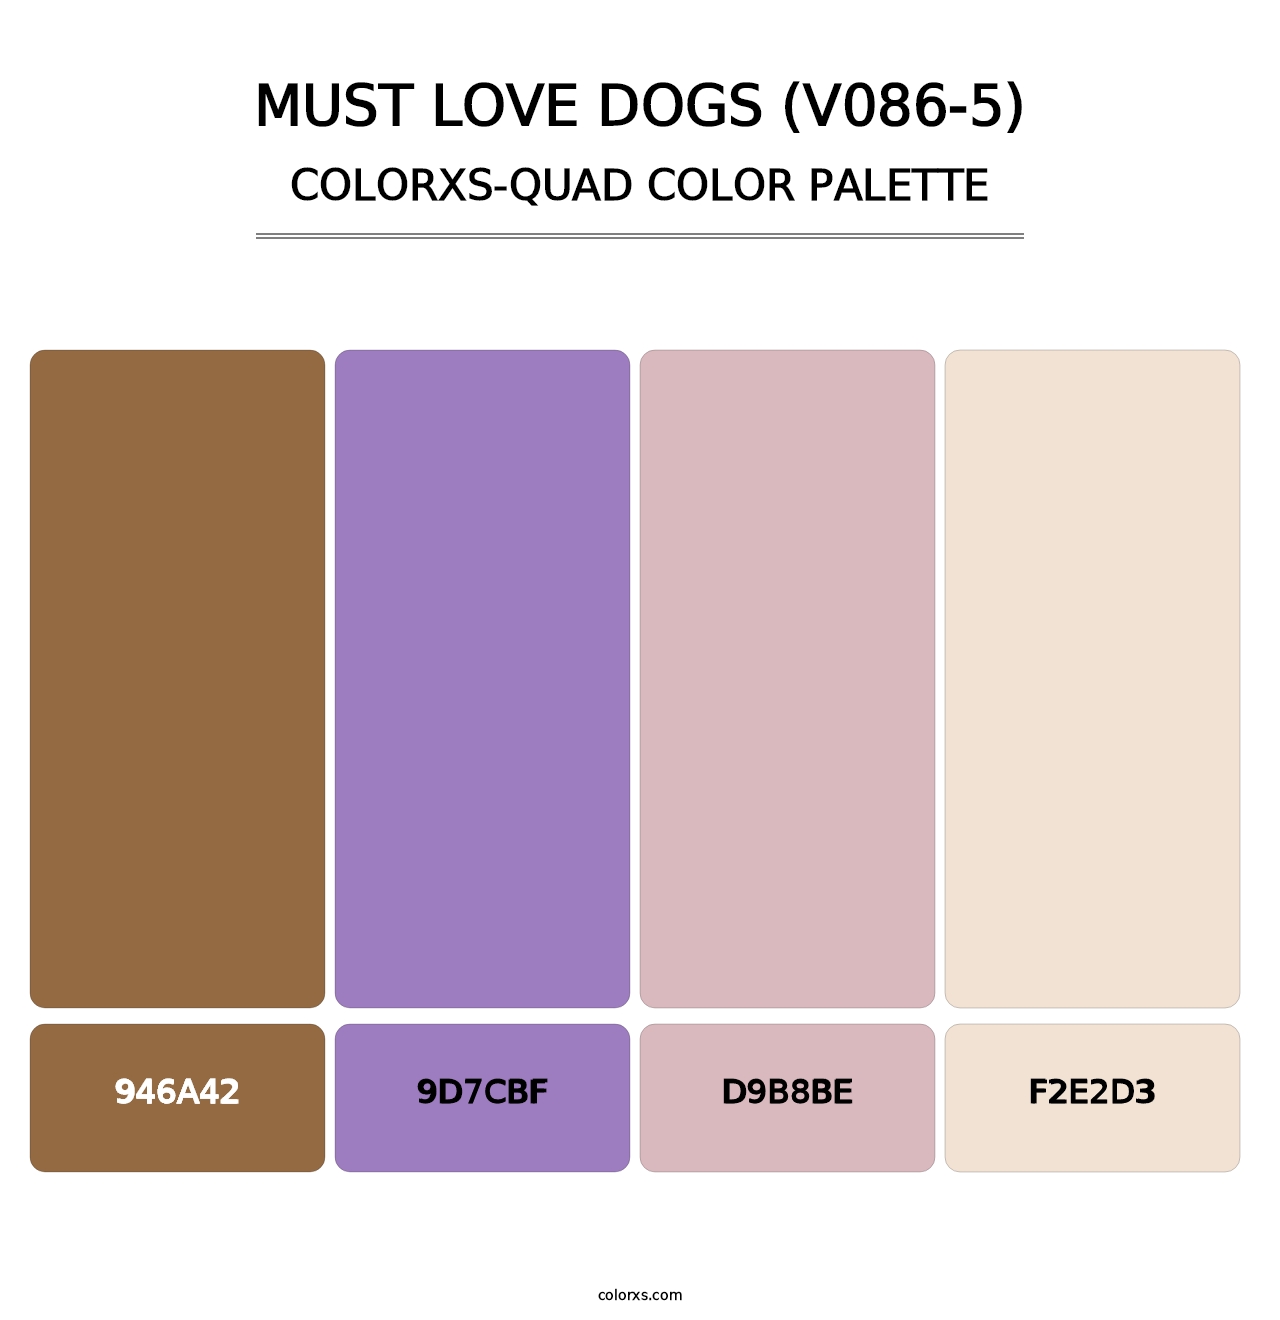 Must Love Dogs (V086-5) - Colorxs Quad Palette